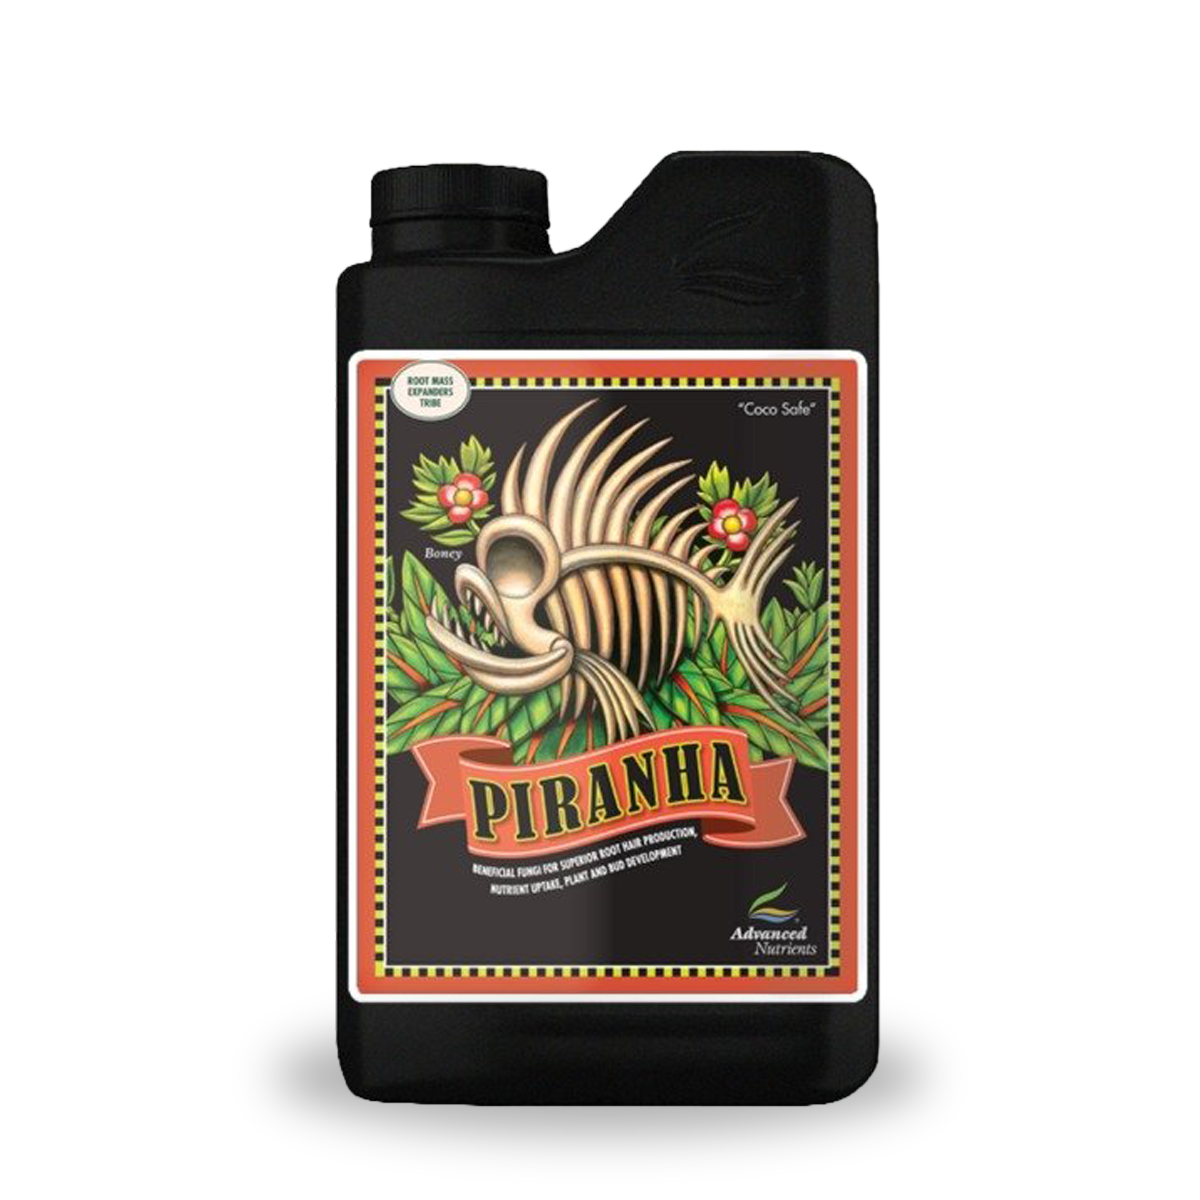 Piranha - Advanced Nutrients 